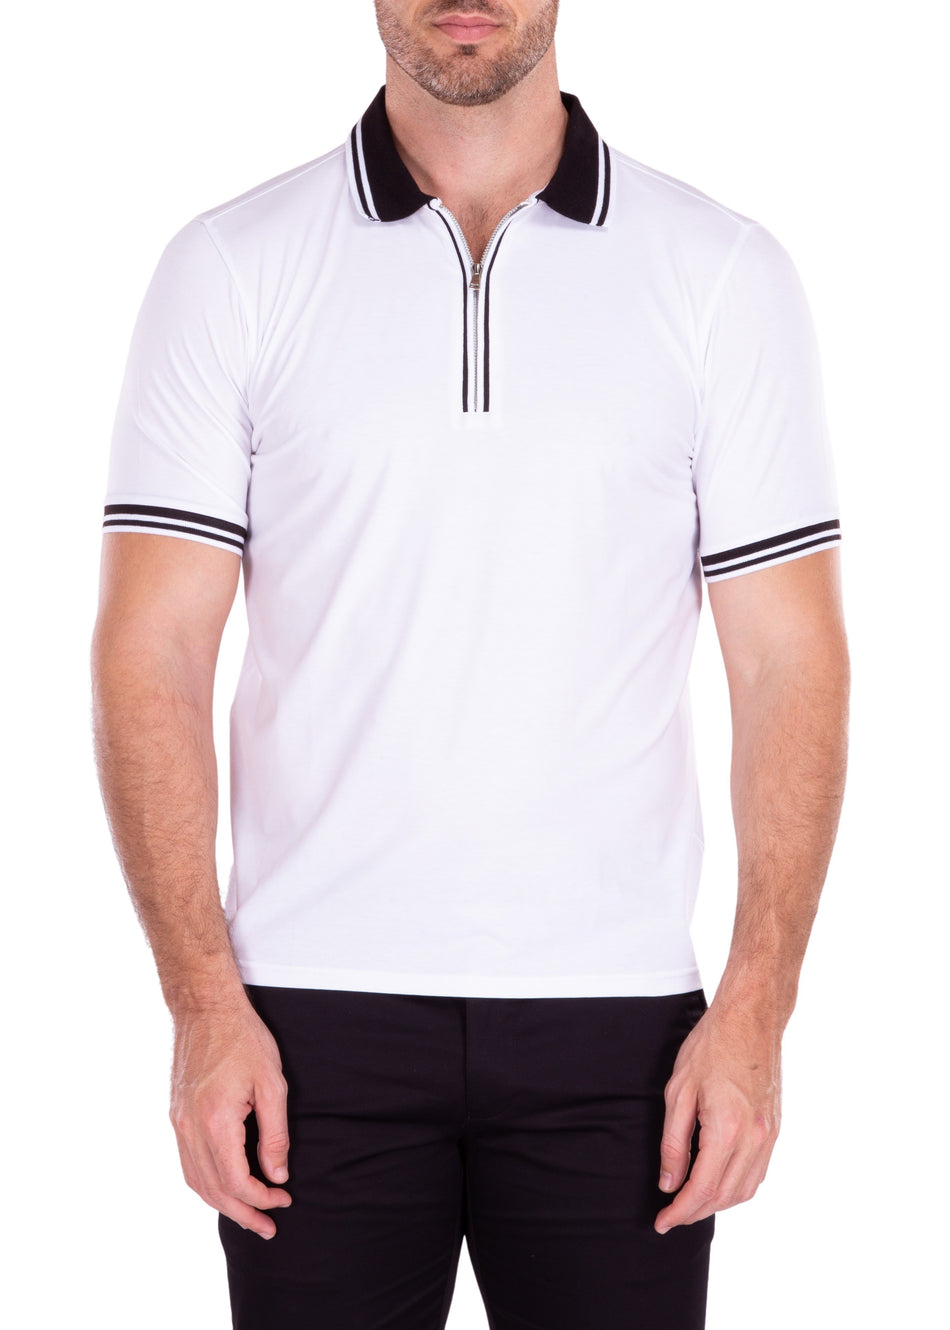 211819 - White Zipper Polo Shirt